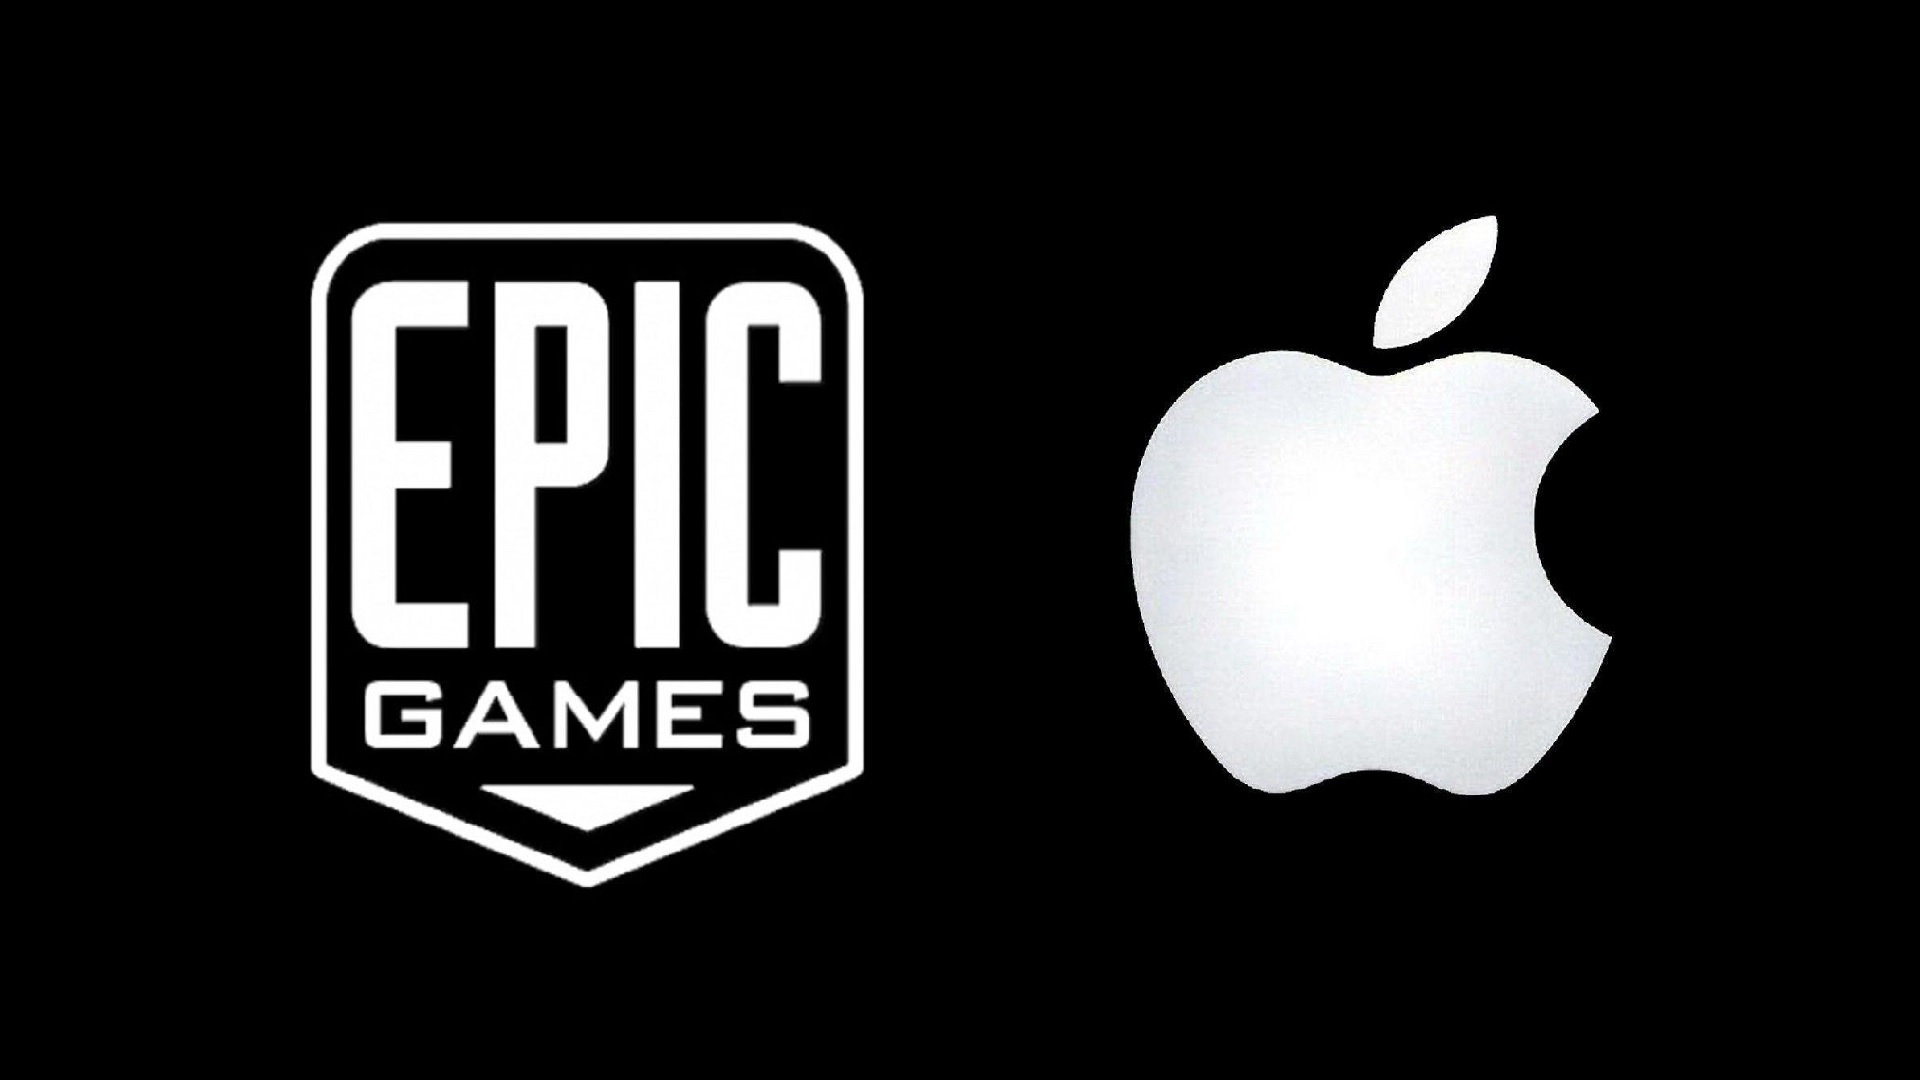 APPLE VS EPIC GAMES